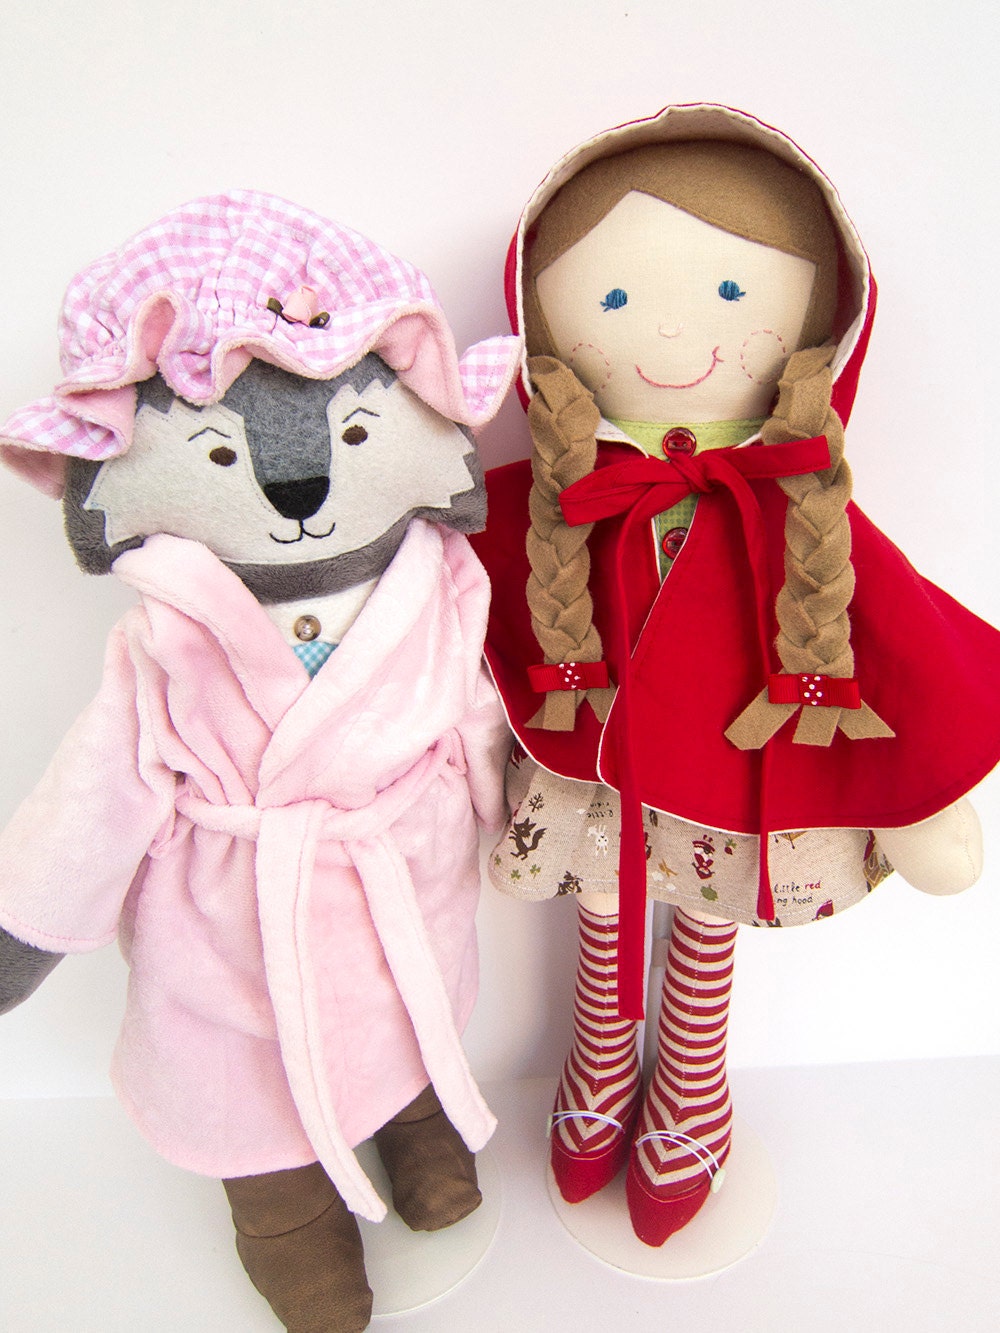 Little Red Riding Hood Big Bad Wolf Cloth Doll Rag Doll Ready to Ship